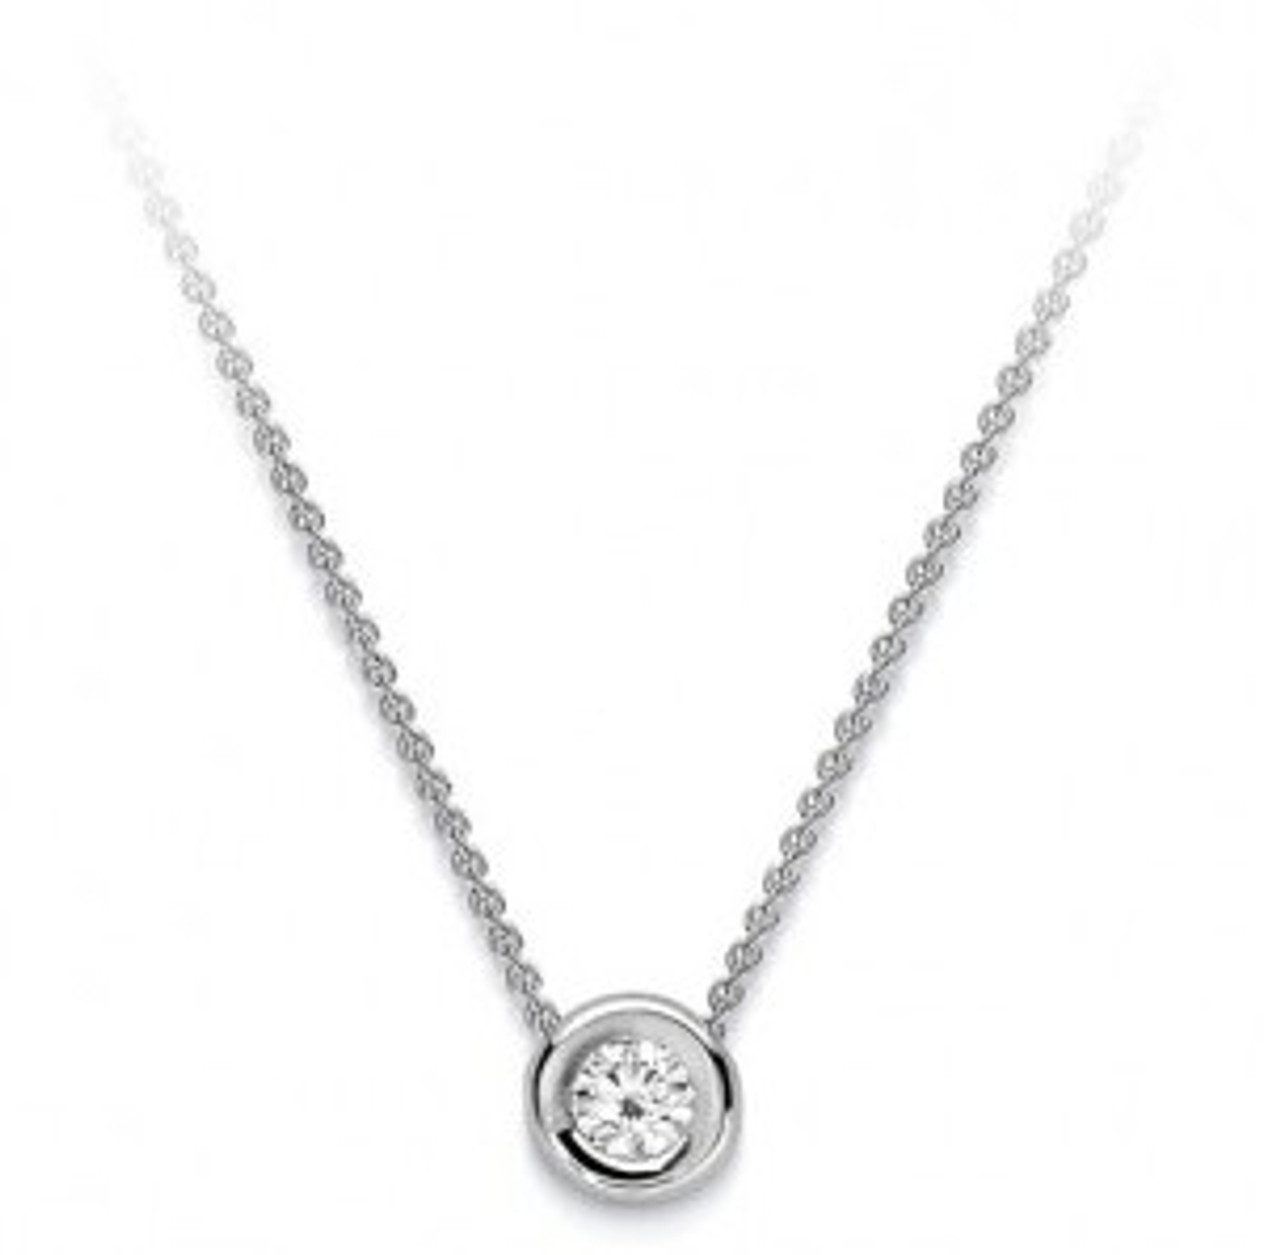 Round Cluster Flower Diamond Pendant Necklace 14K White Gold 1.55 CTW | eBay